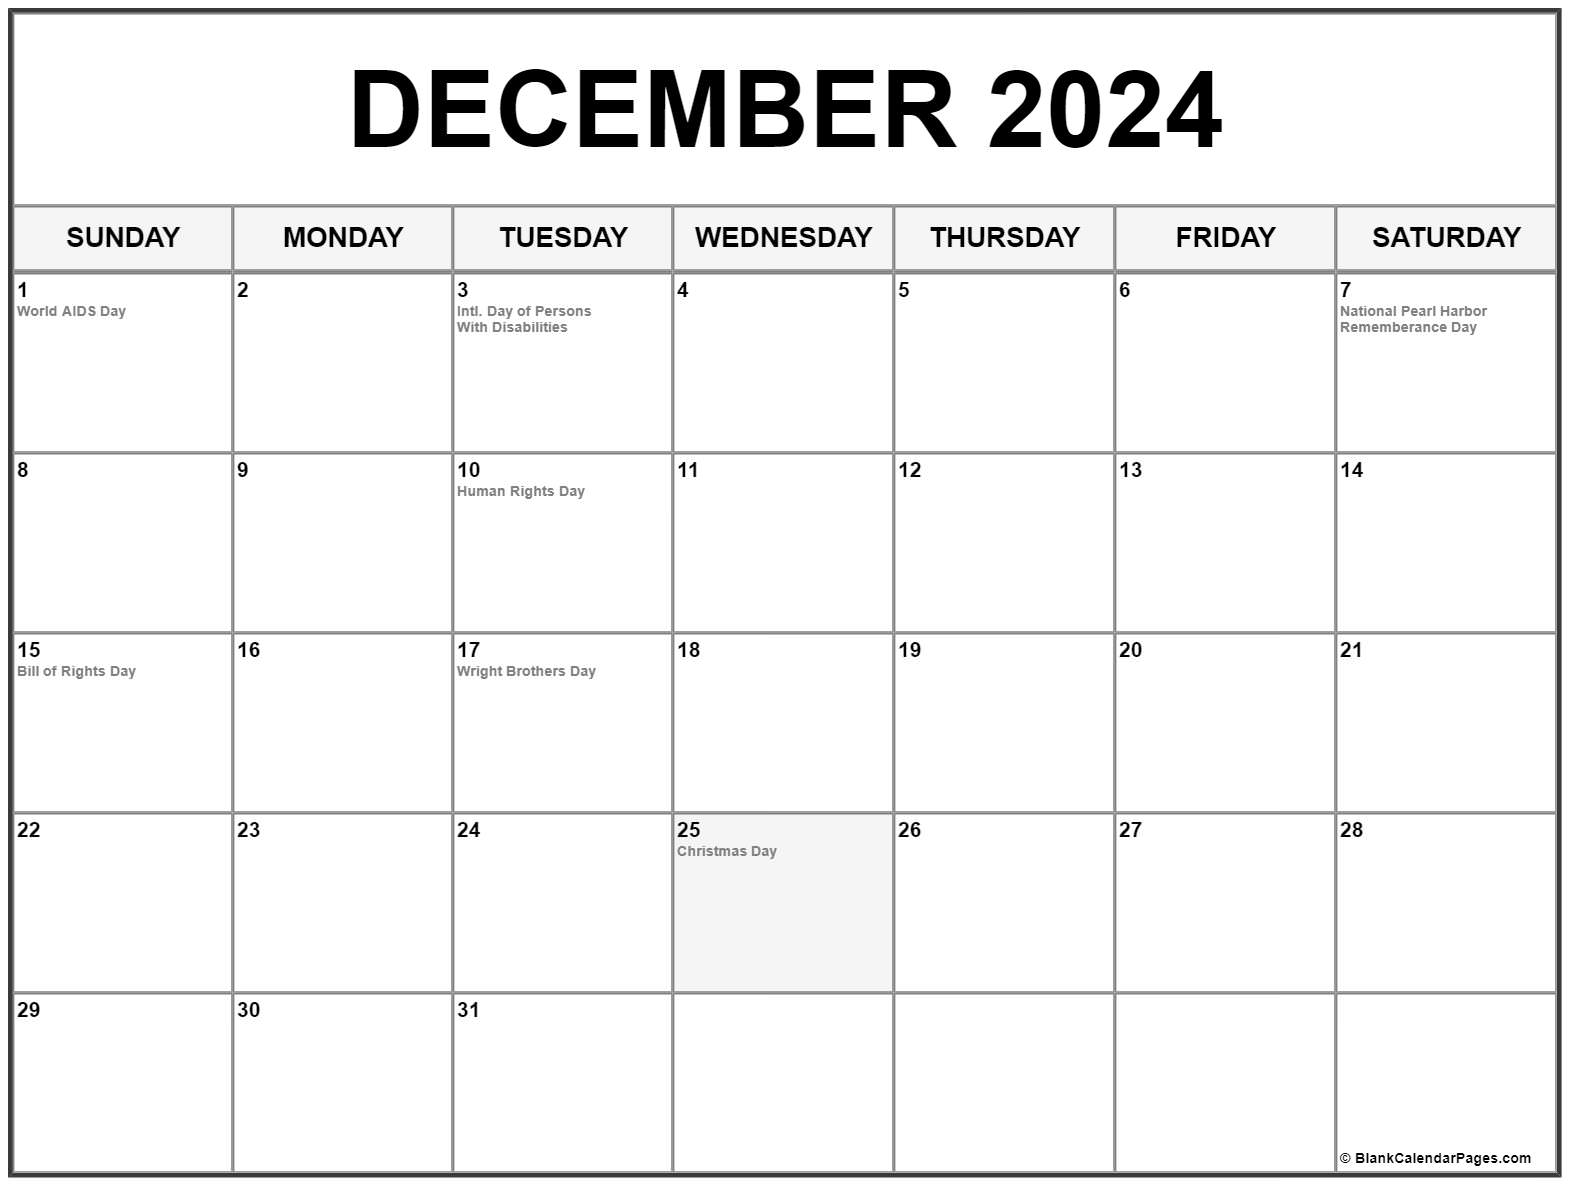 December Calendar 2022 With Holidays December 2022 With Holidays Calendar